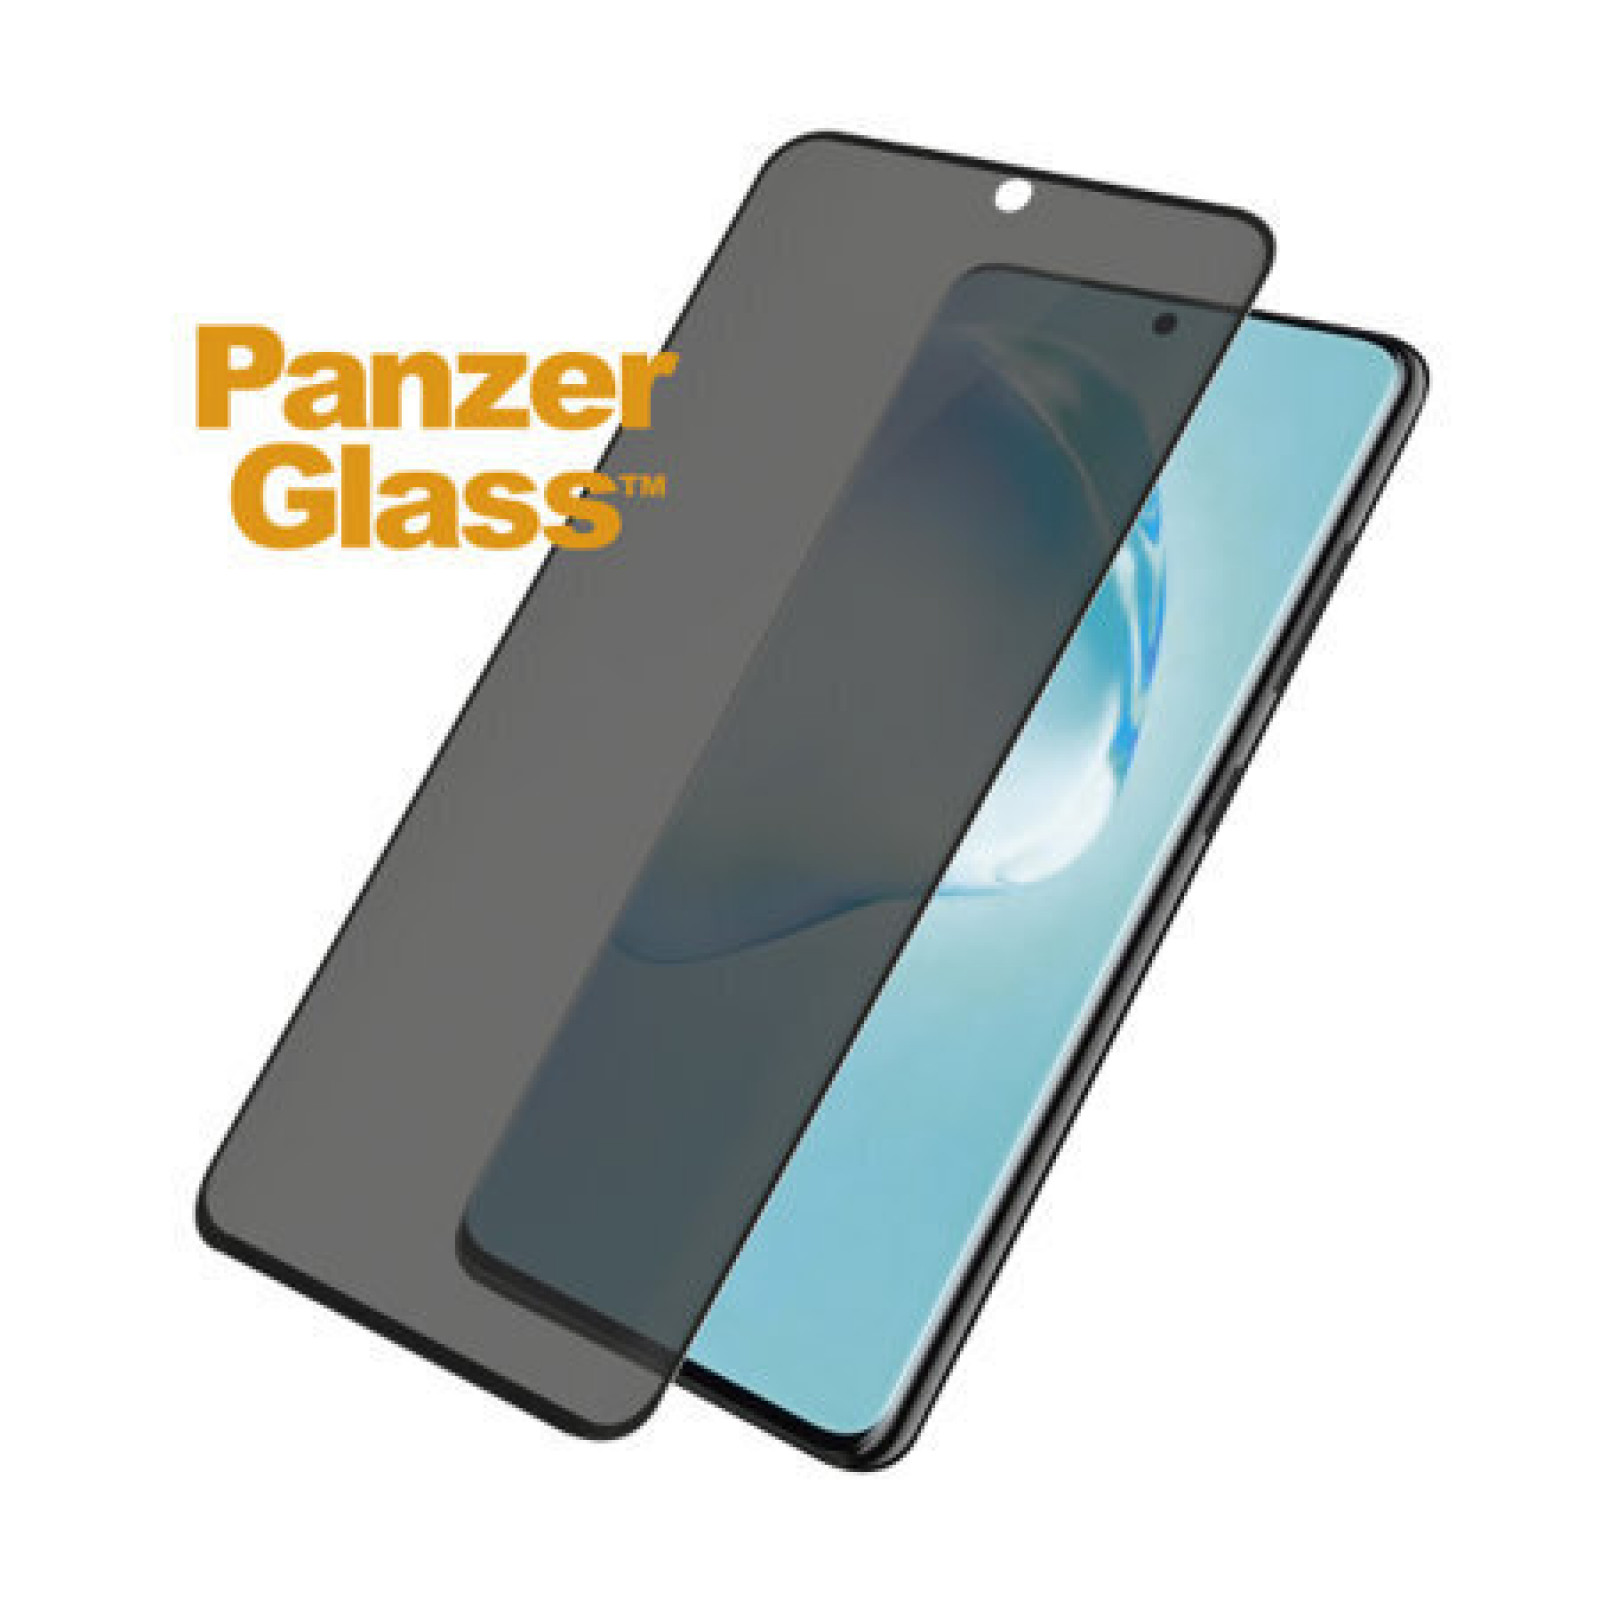 Стъклен протектор PanzerGlass за Samsung Galaxy S20 Case Friendly Privacy Черен